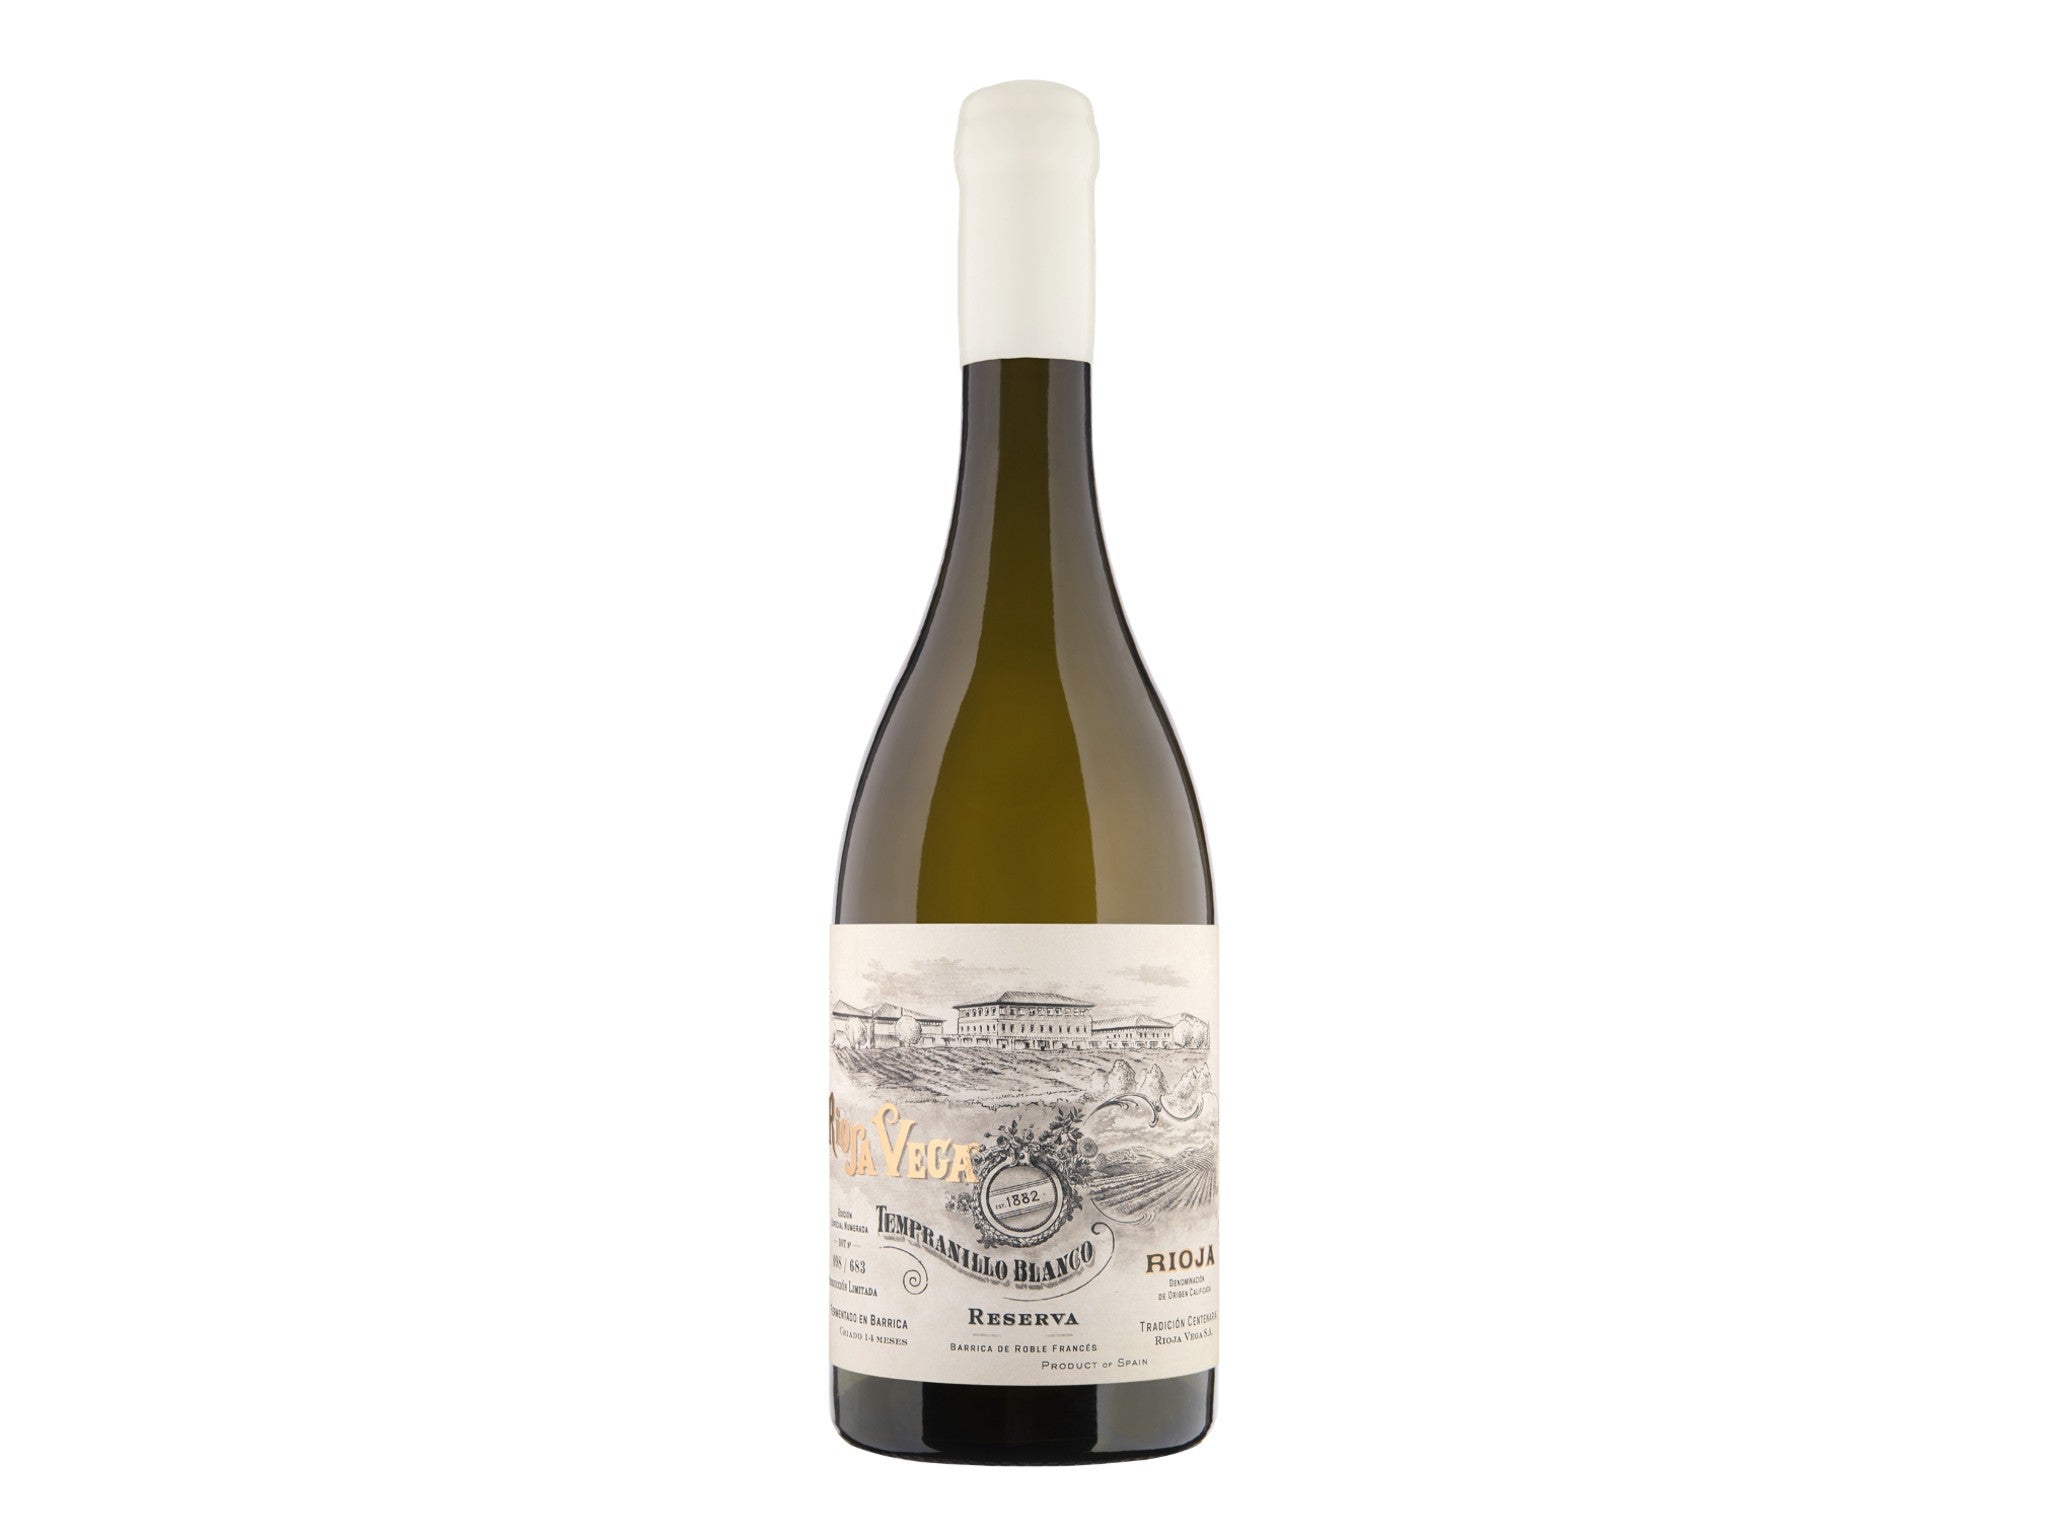 Rioja Vega tempranillo blanco reserva 2015, 750ml indybest.jpeg